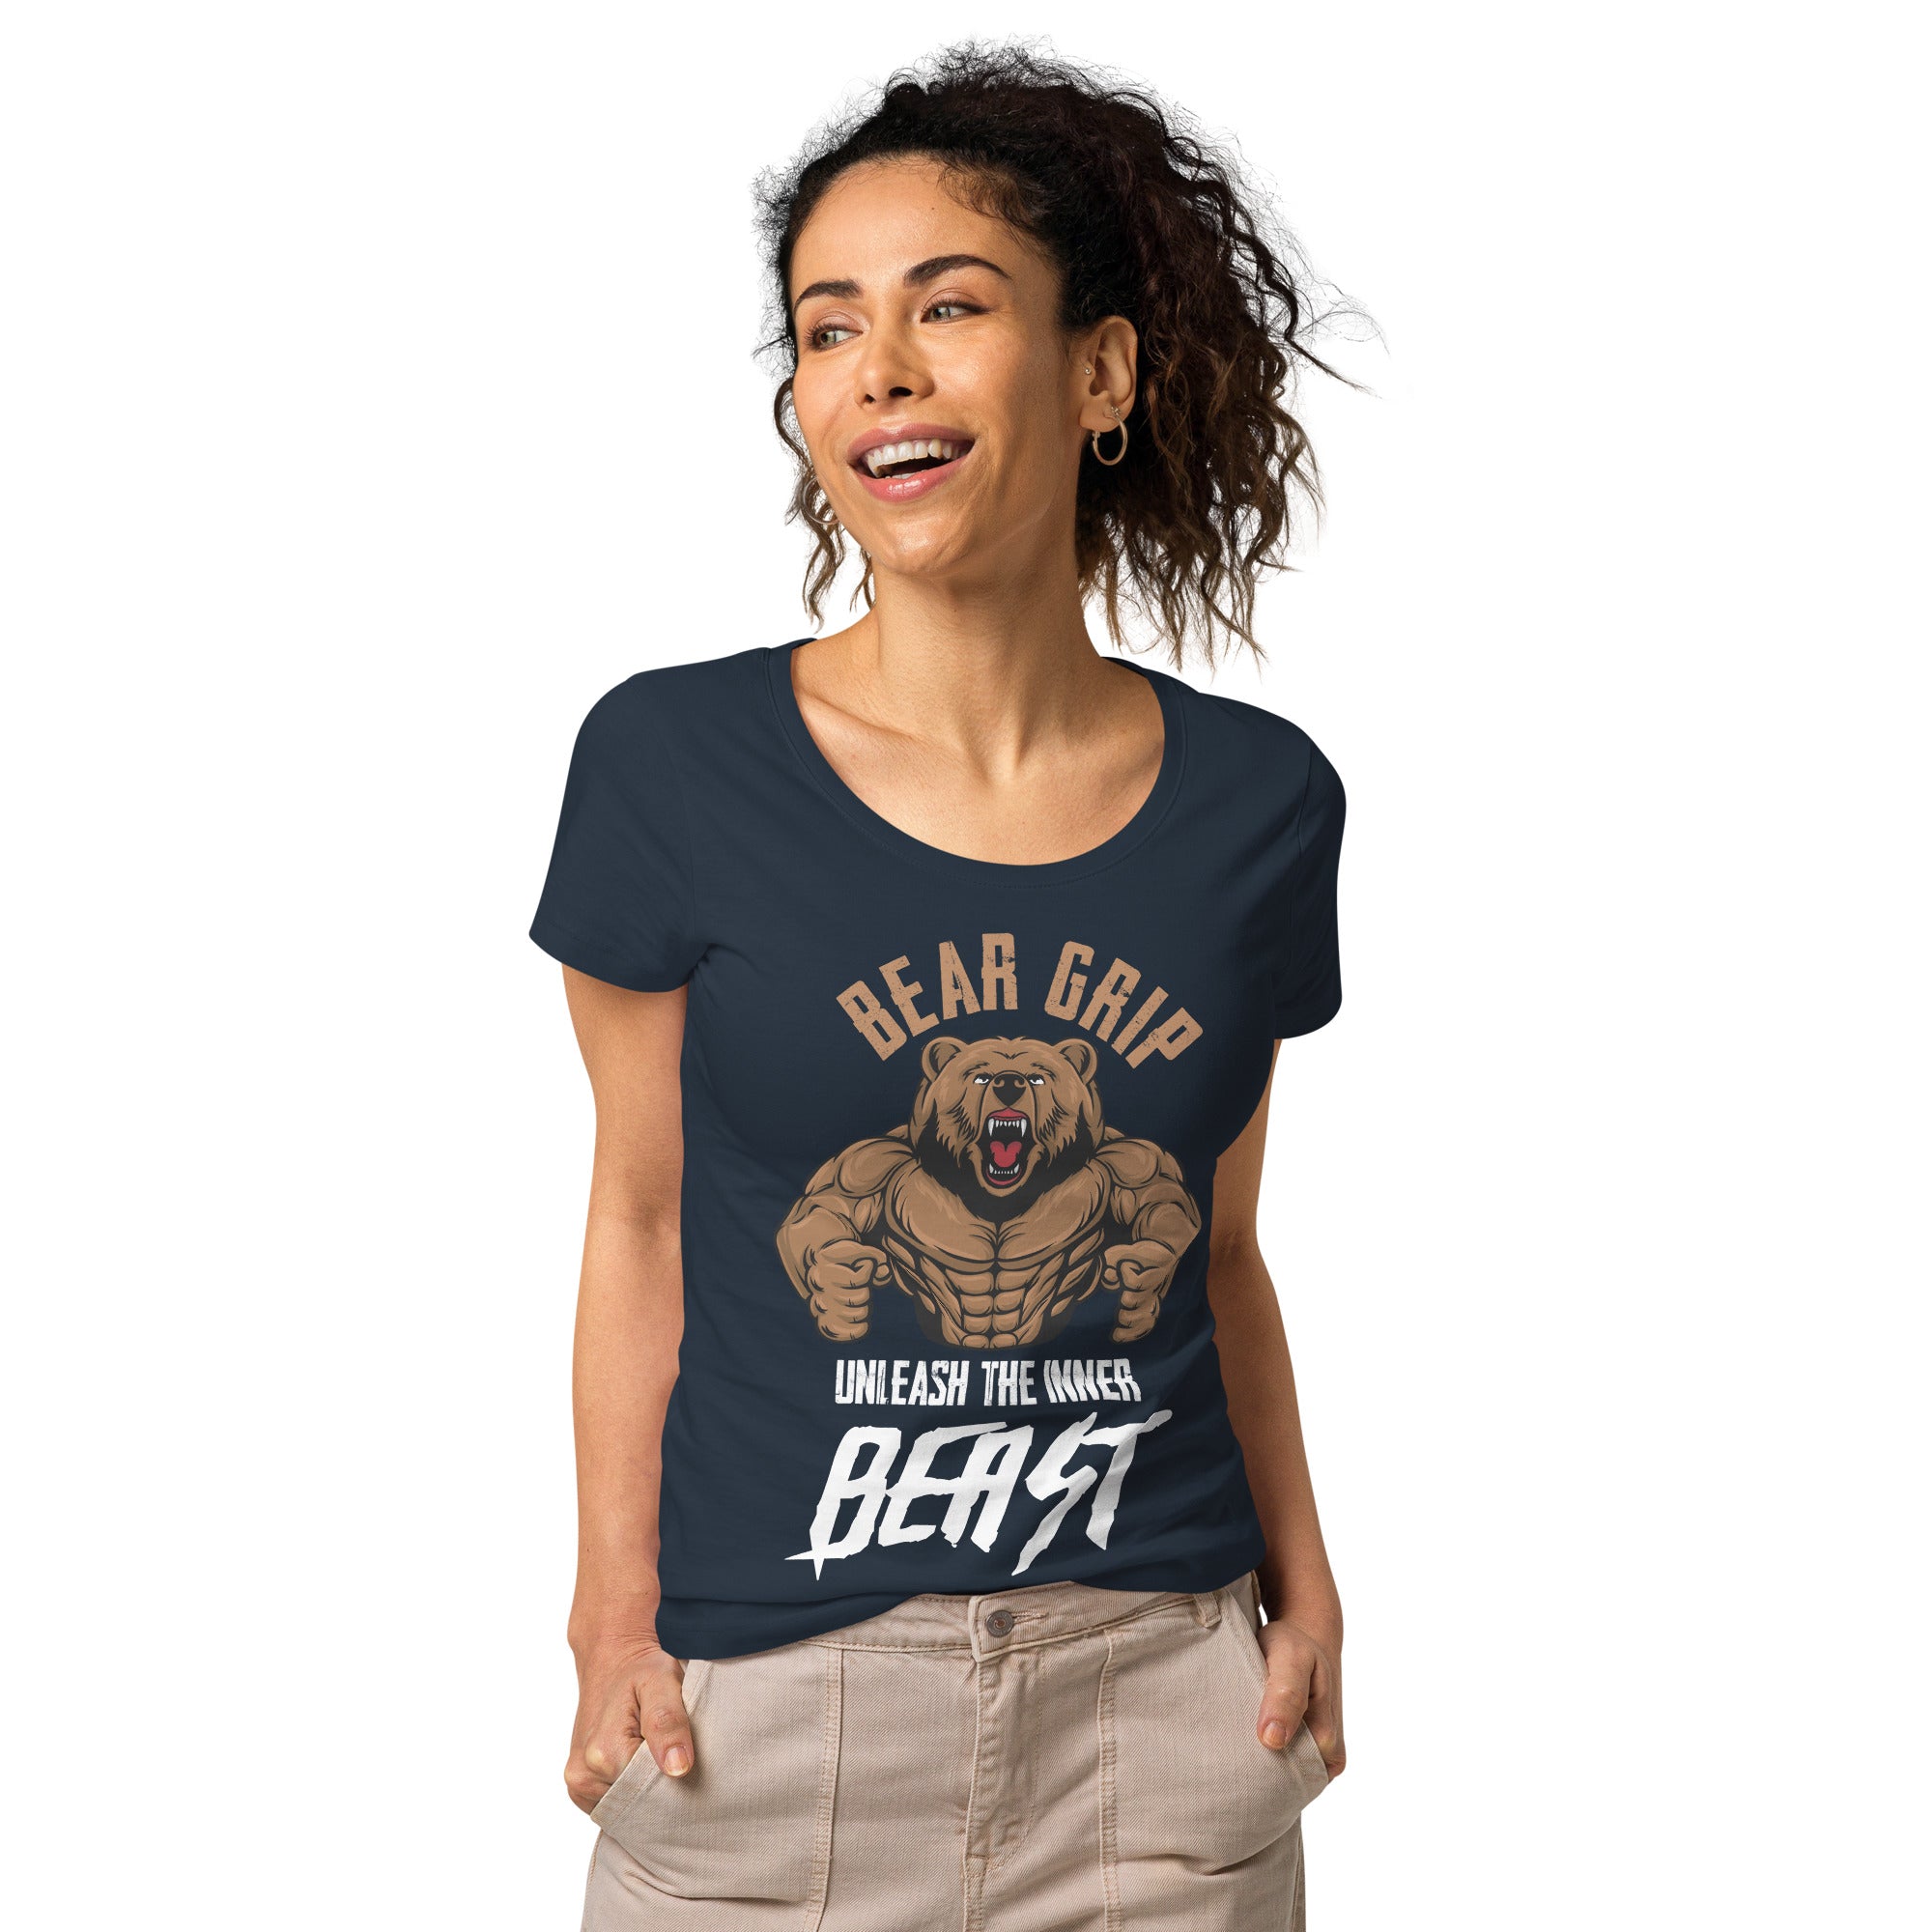 BEAR GRIP - Women’s basic organic t-shirt (Unleash The Inner Beast)